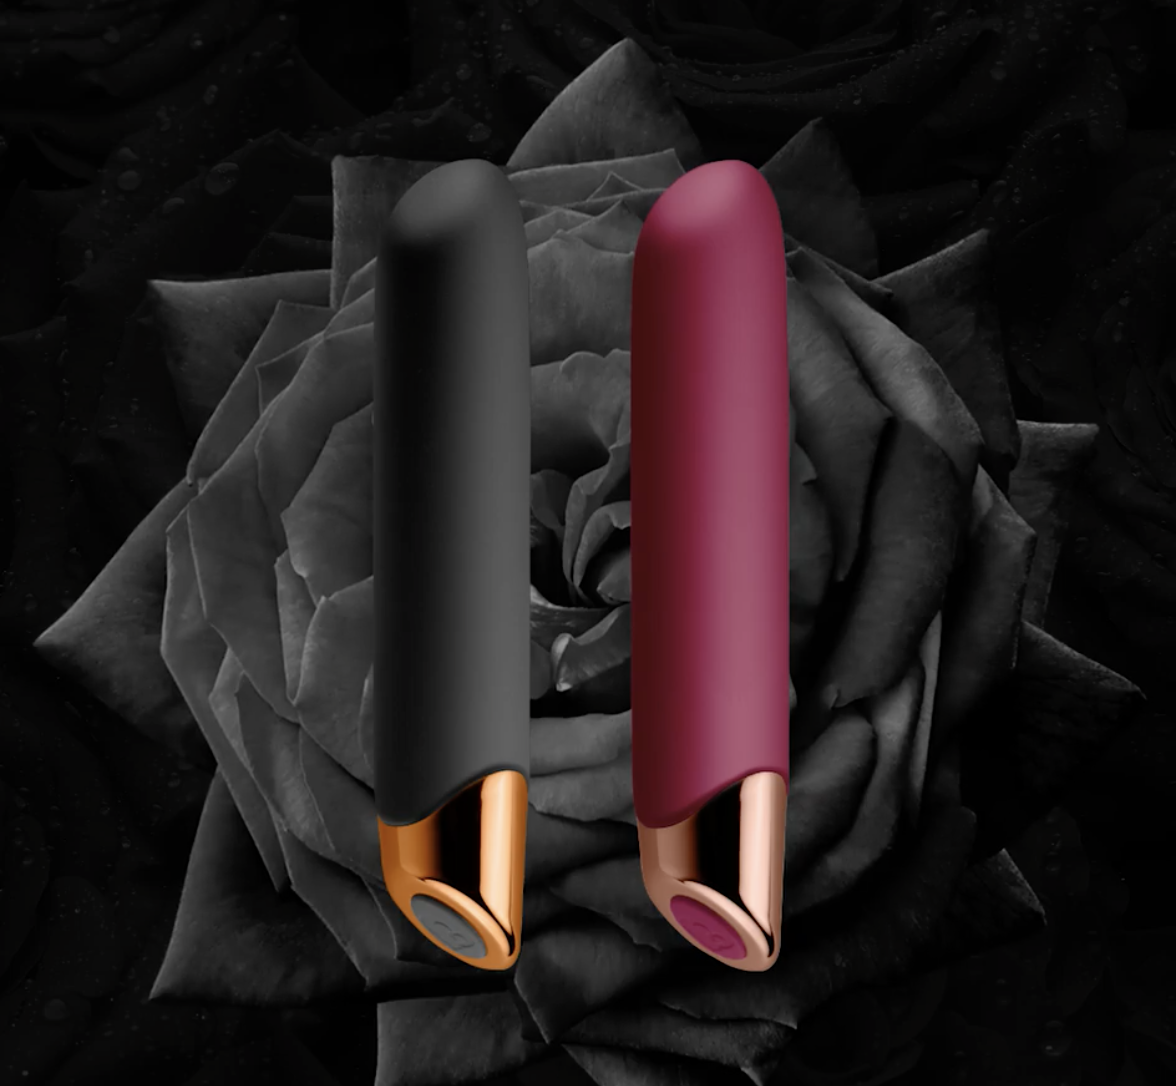 Black and wine red bullet vibrators